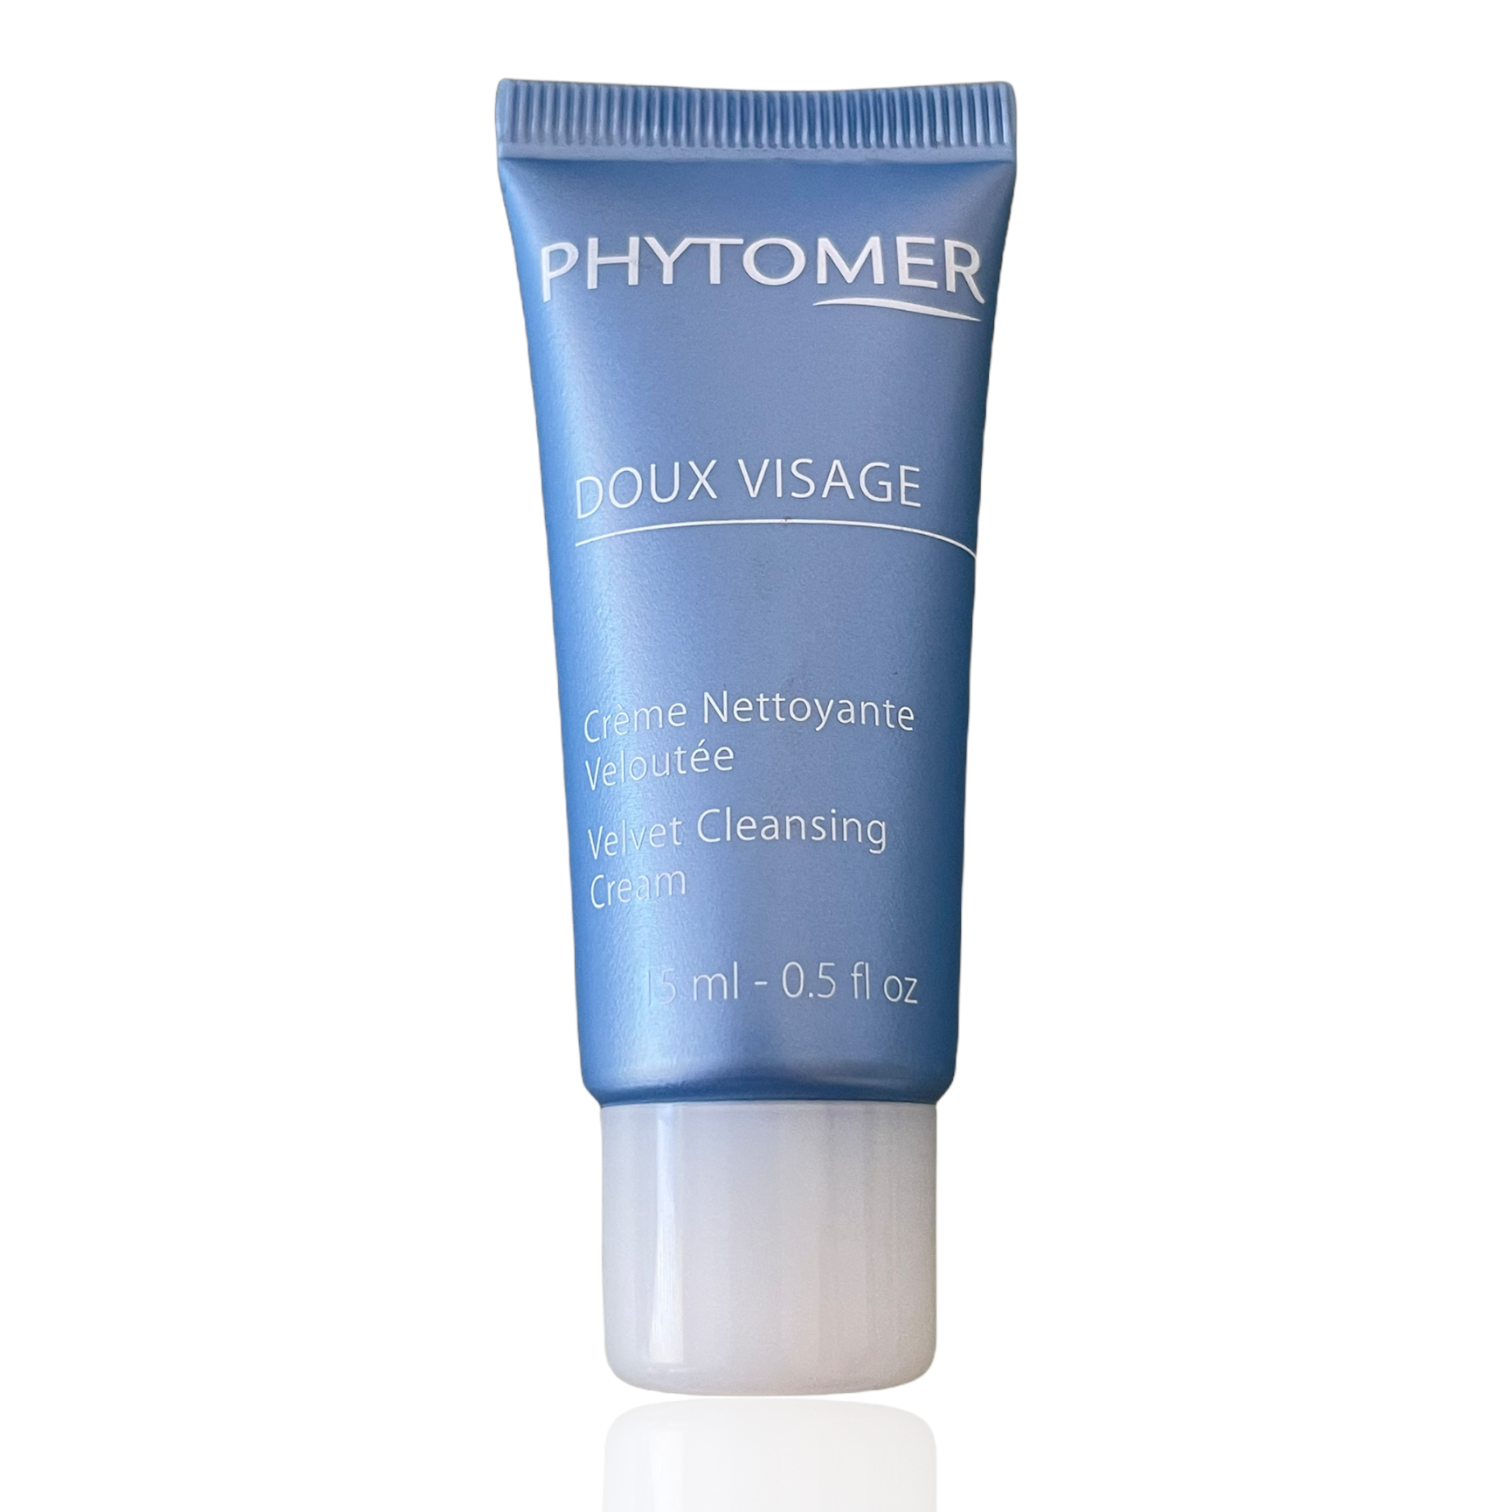 Phytomer Doux Visage Velvet Cleansing Cream